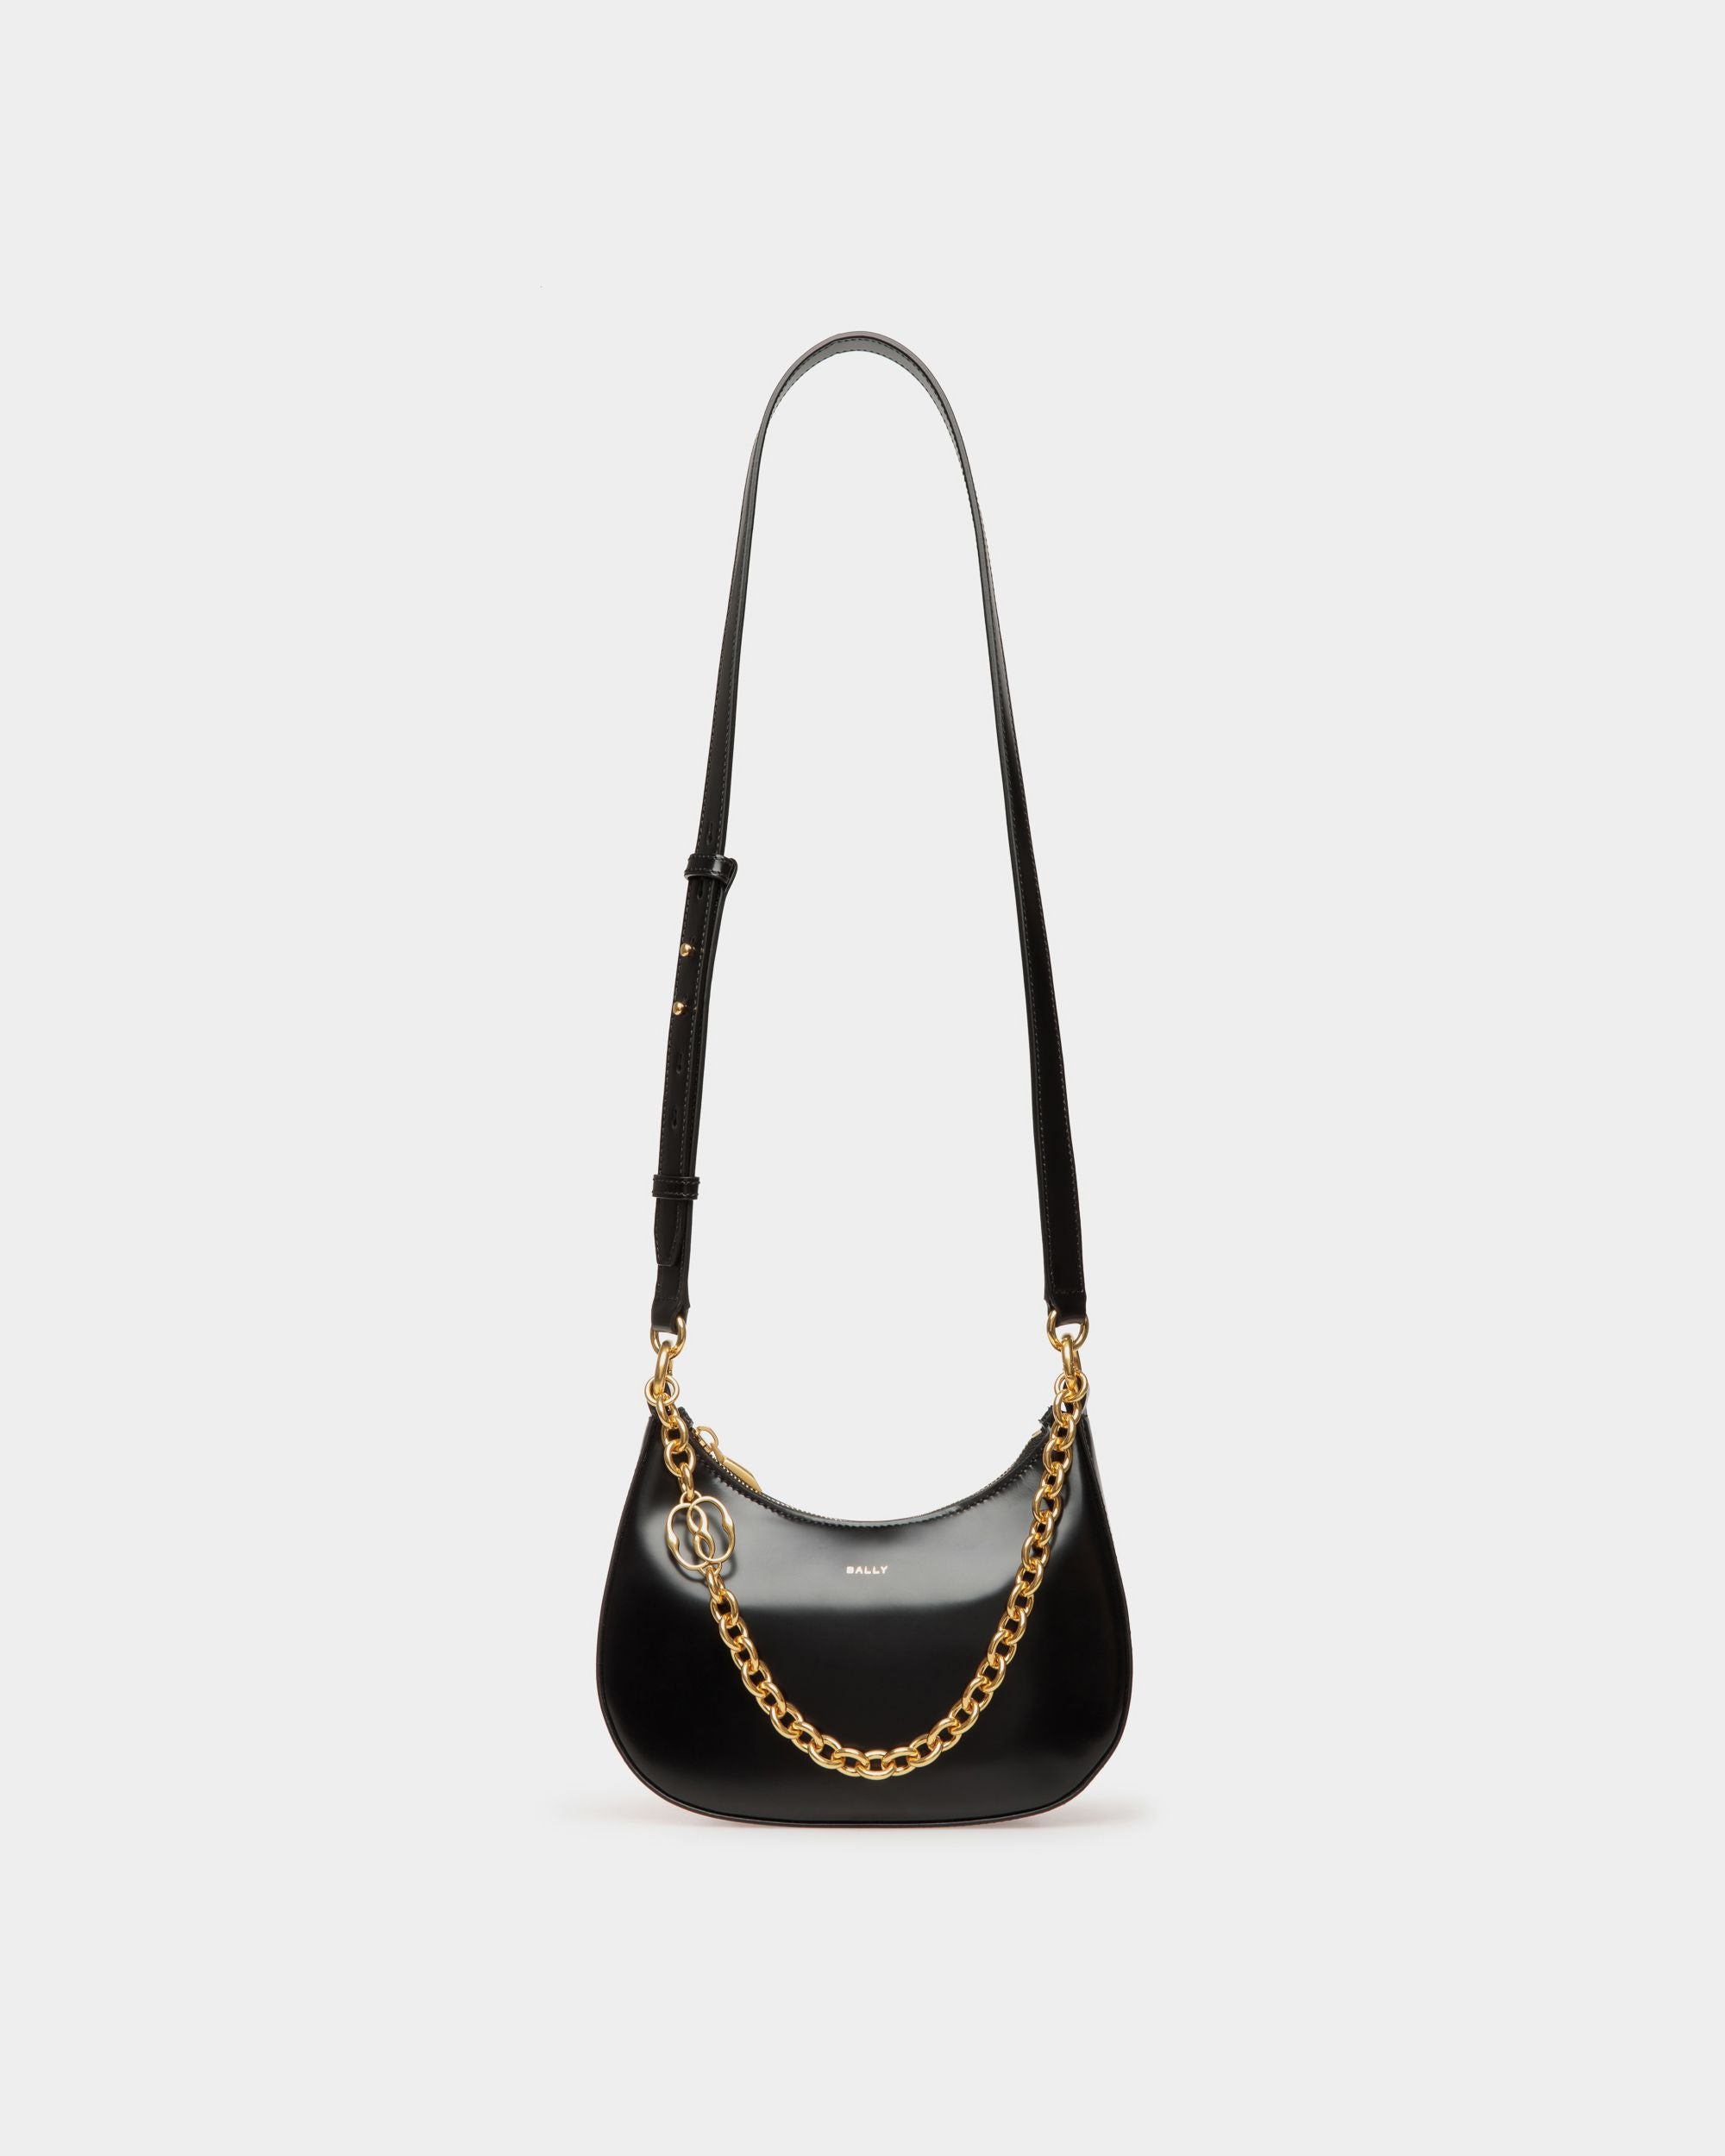 Women's Emblem Mini Crossbody Bag in Black Brushed Leather | Bally | Still Life Front